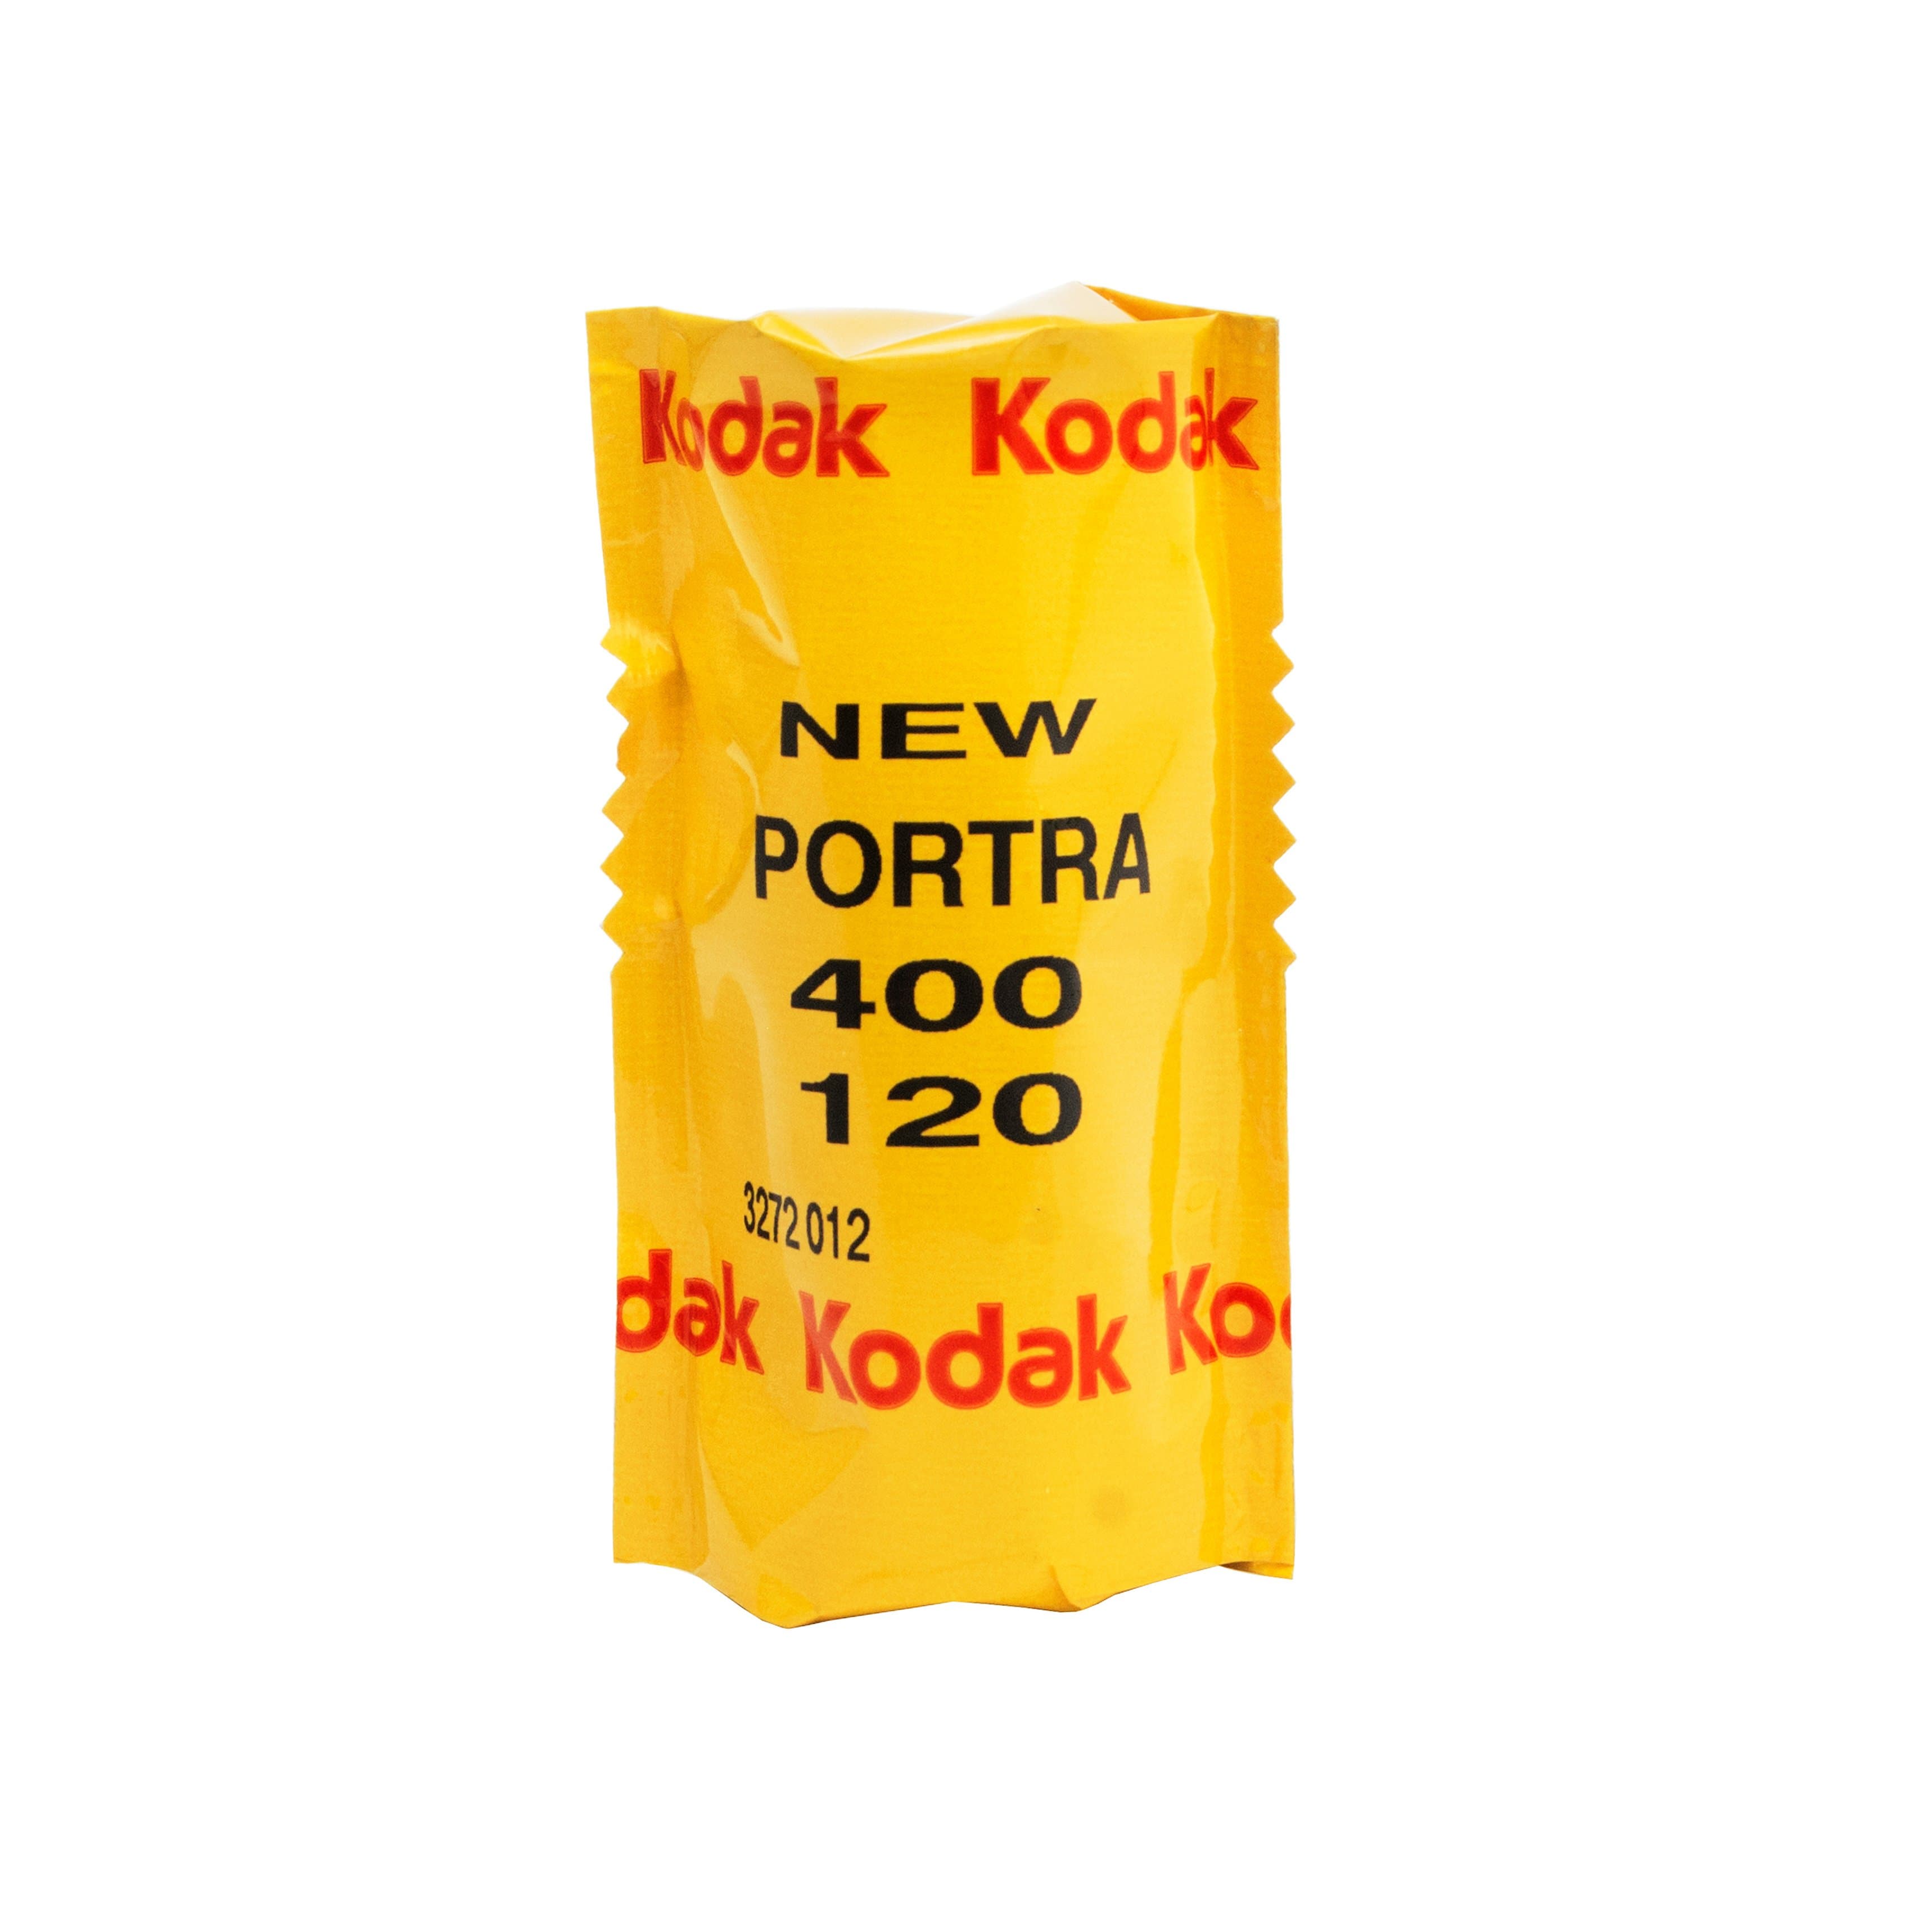 Kodak Professional Portra 400 Color Film 120 - 5 Pack